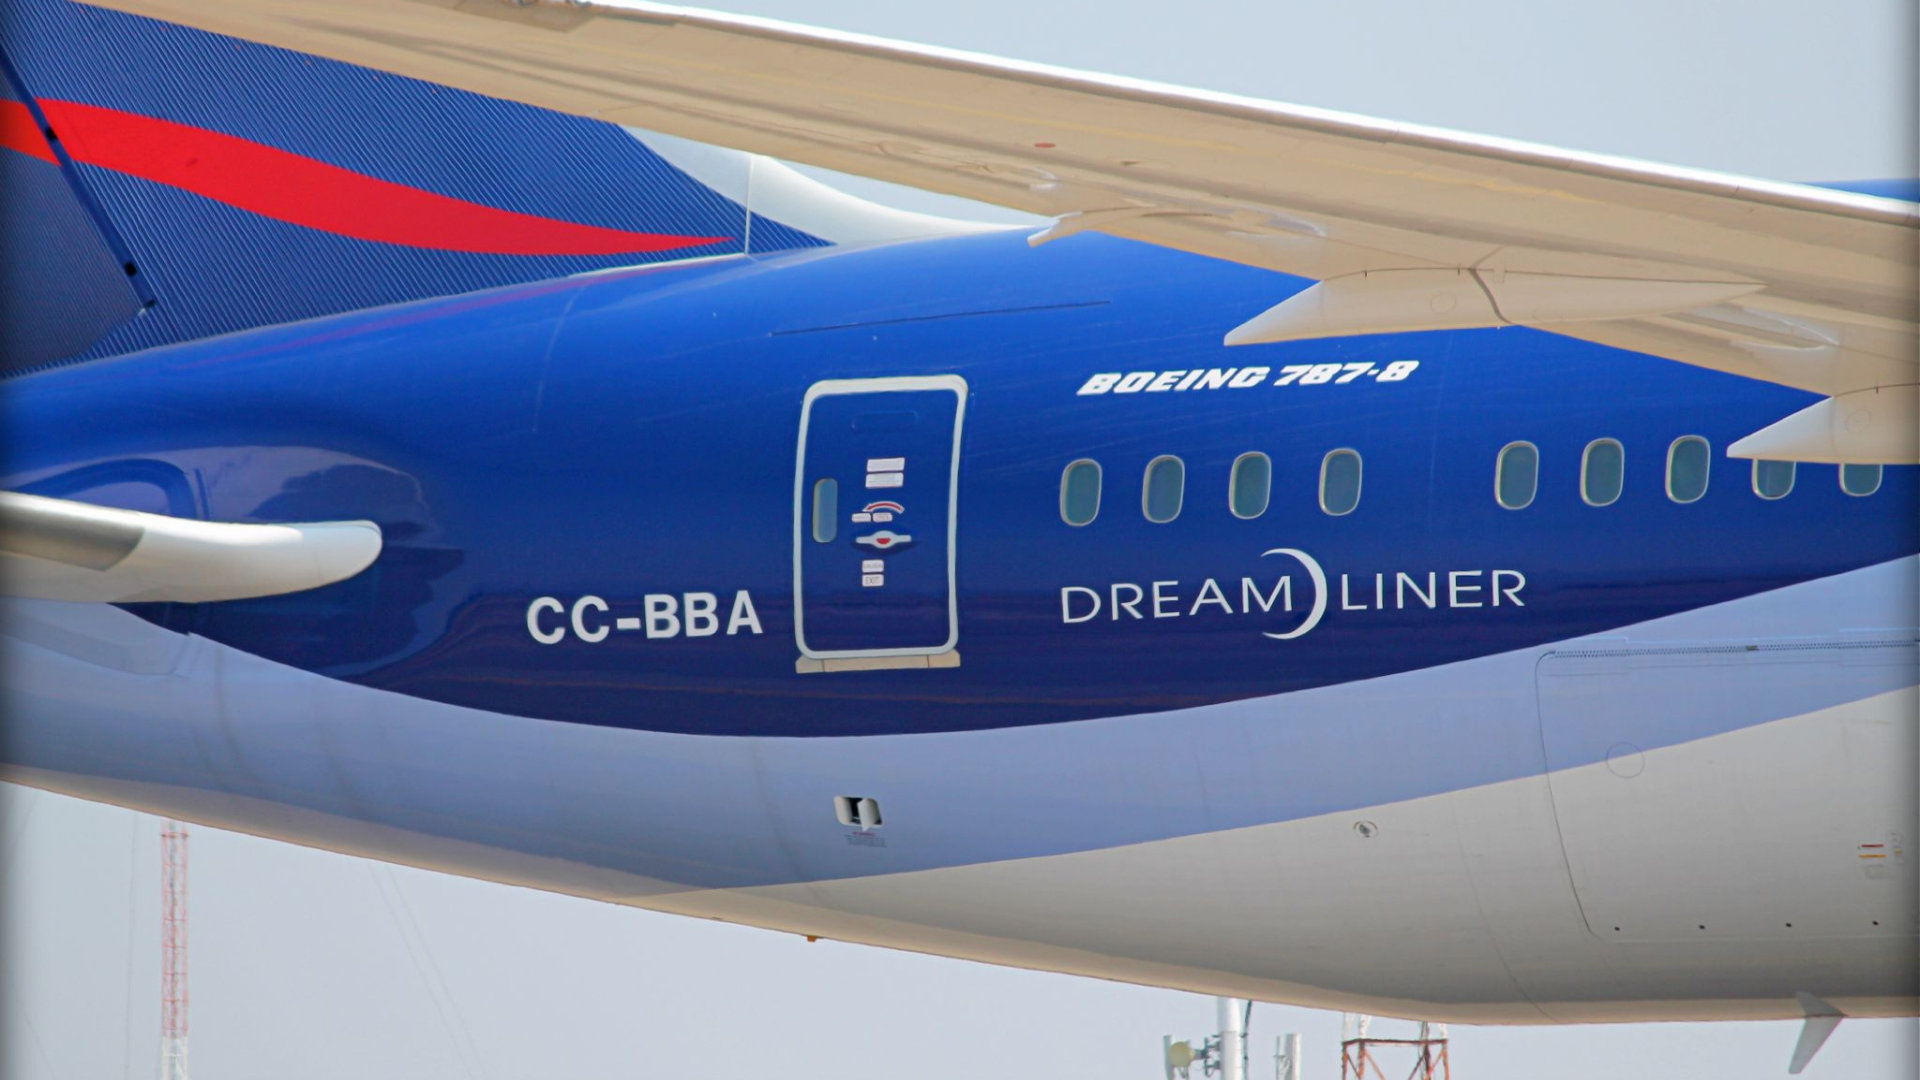 Best Boeing 787 Dreamliner wallpaper ID:476909 for High Resolution full hd 1080p computer